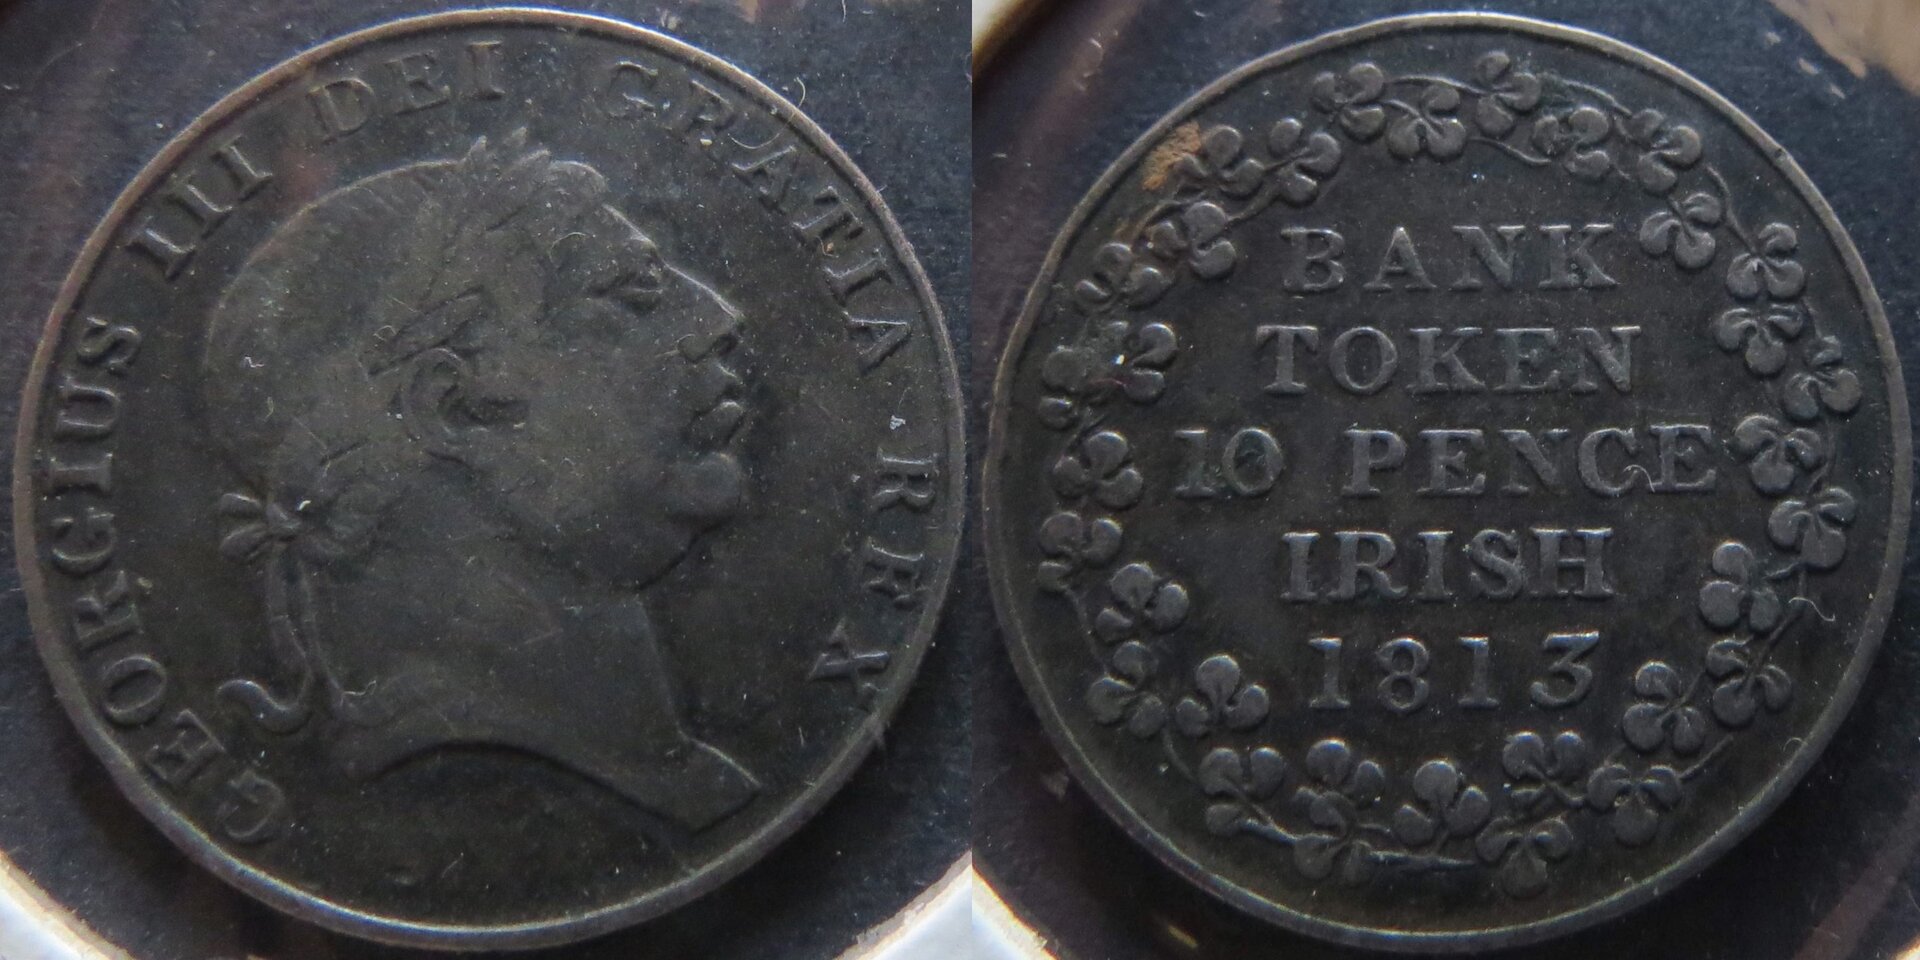 Ireland 10 pence bank token 1813.jpg